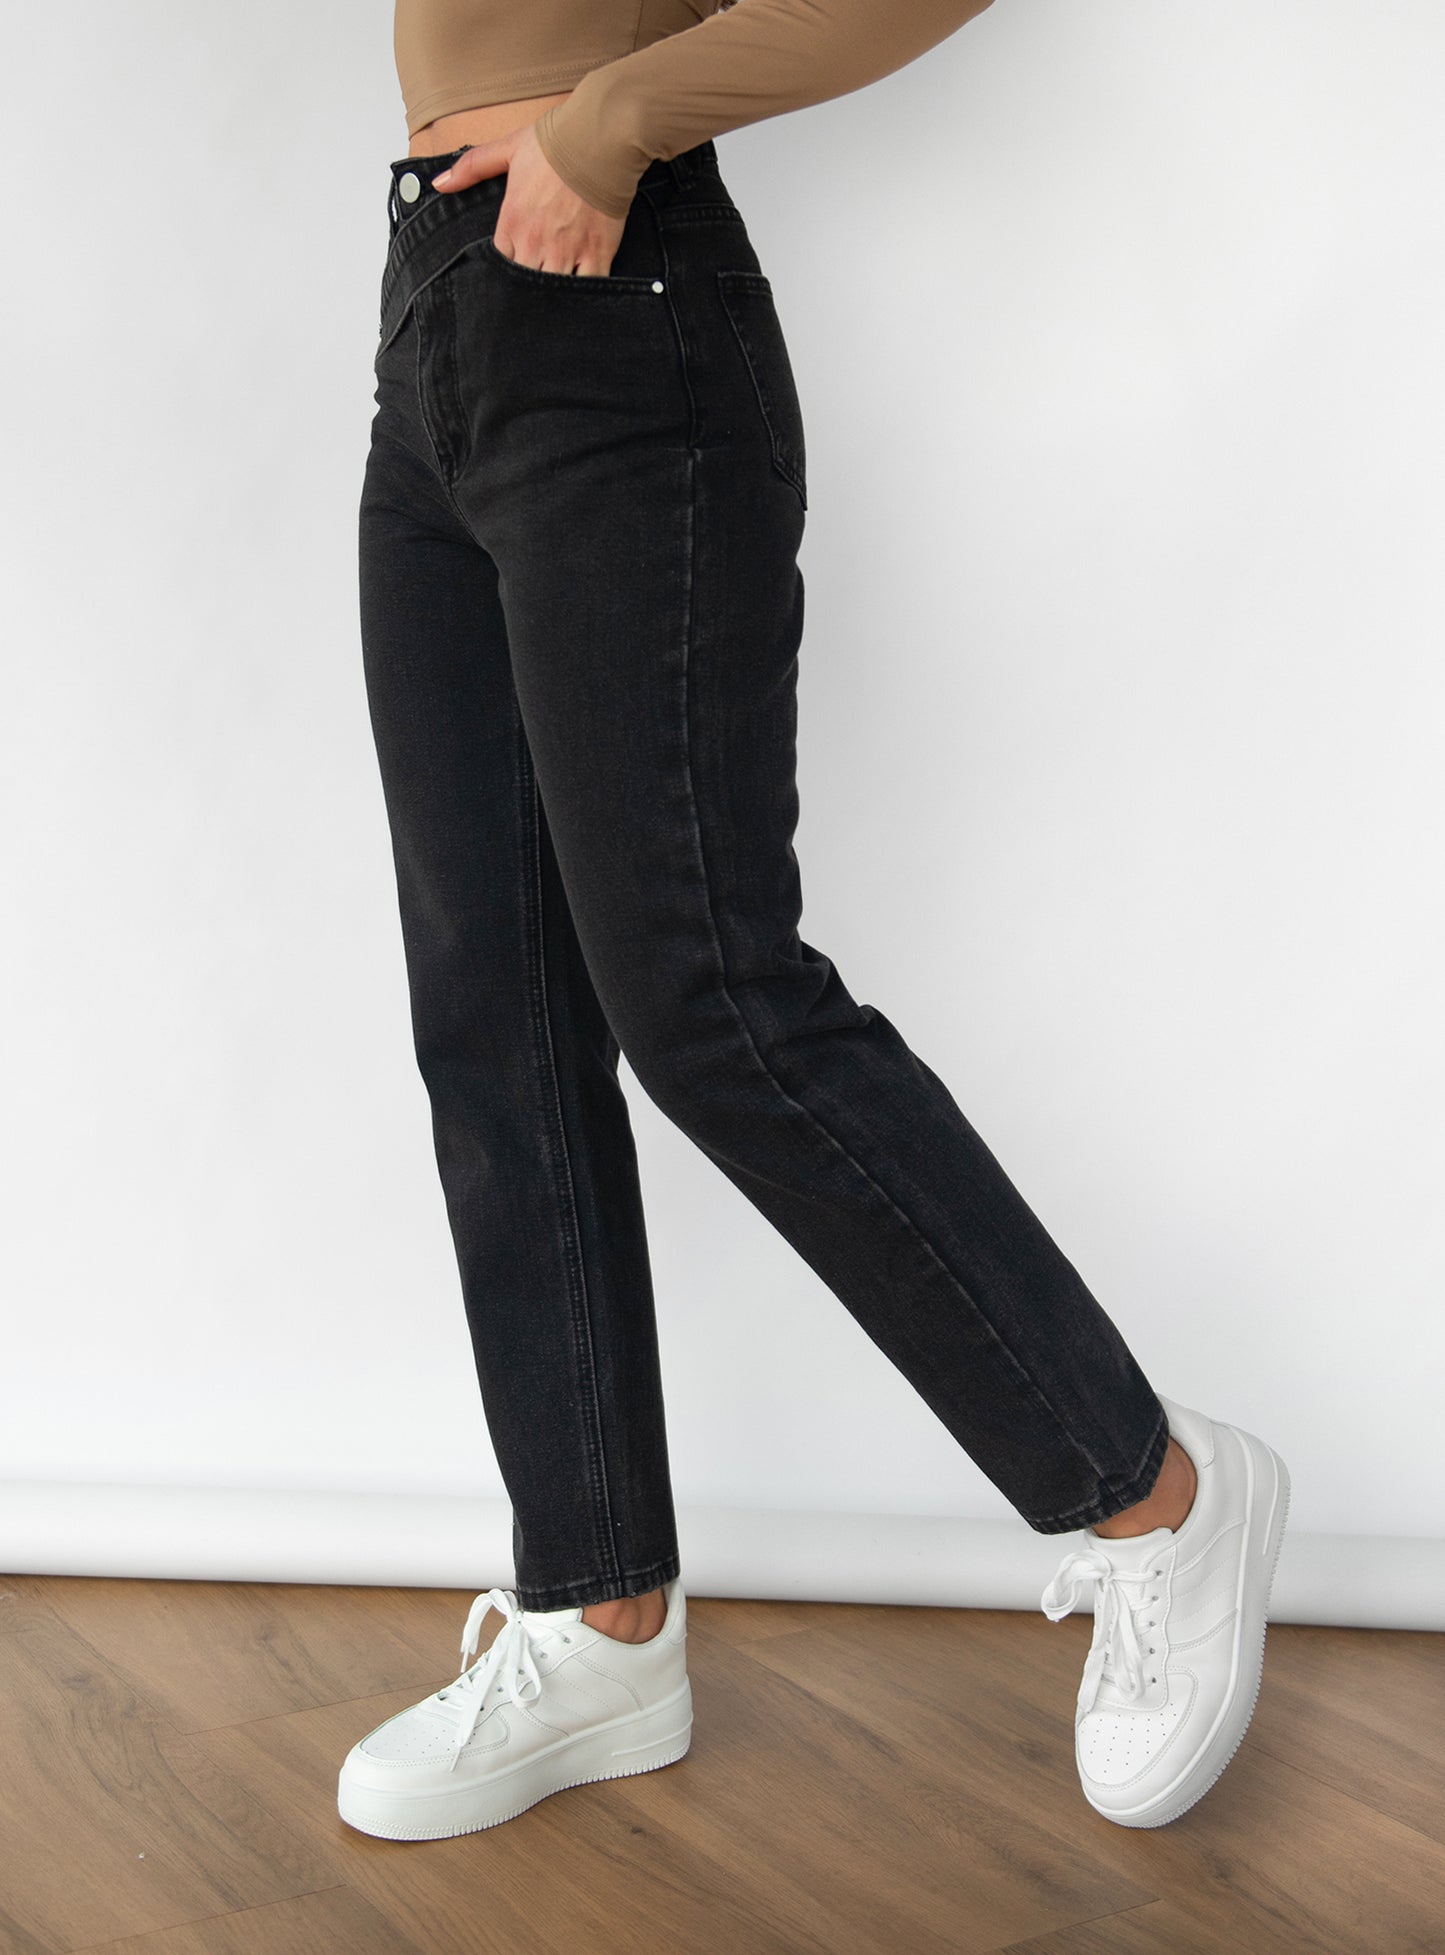 Jeans with asymmetric belt in black